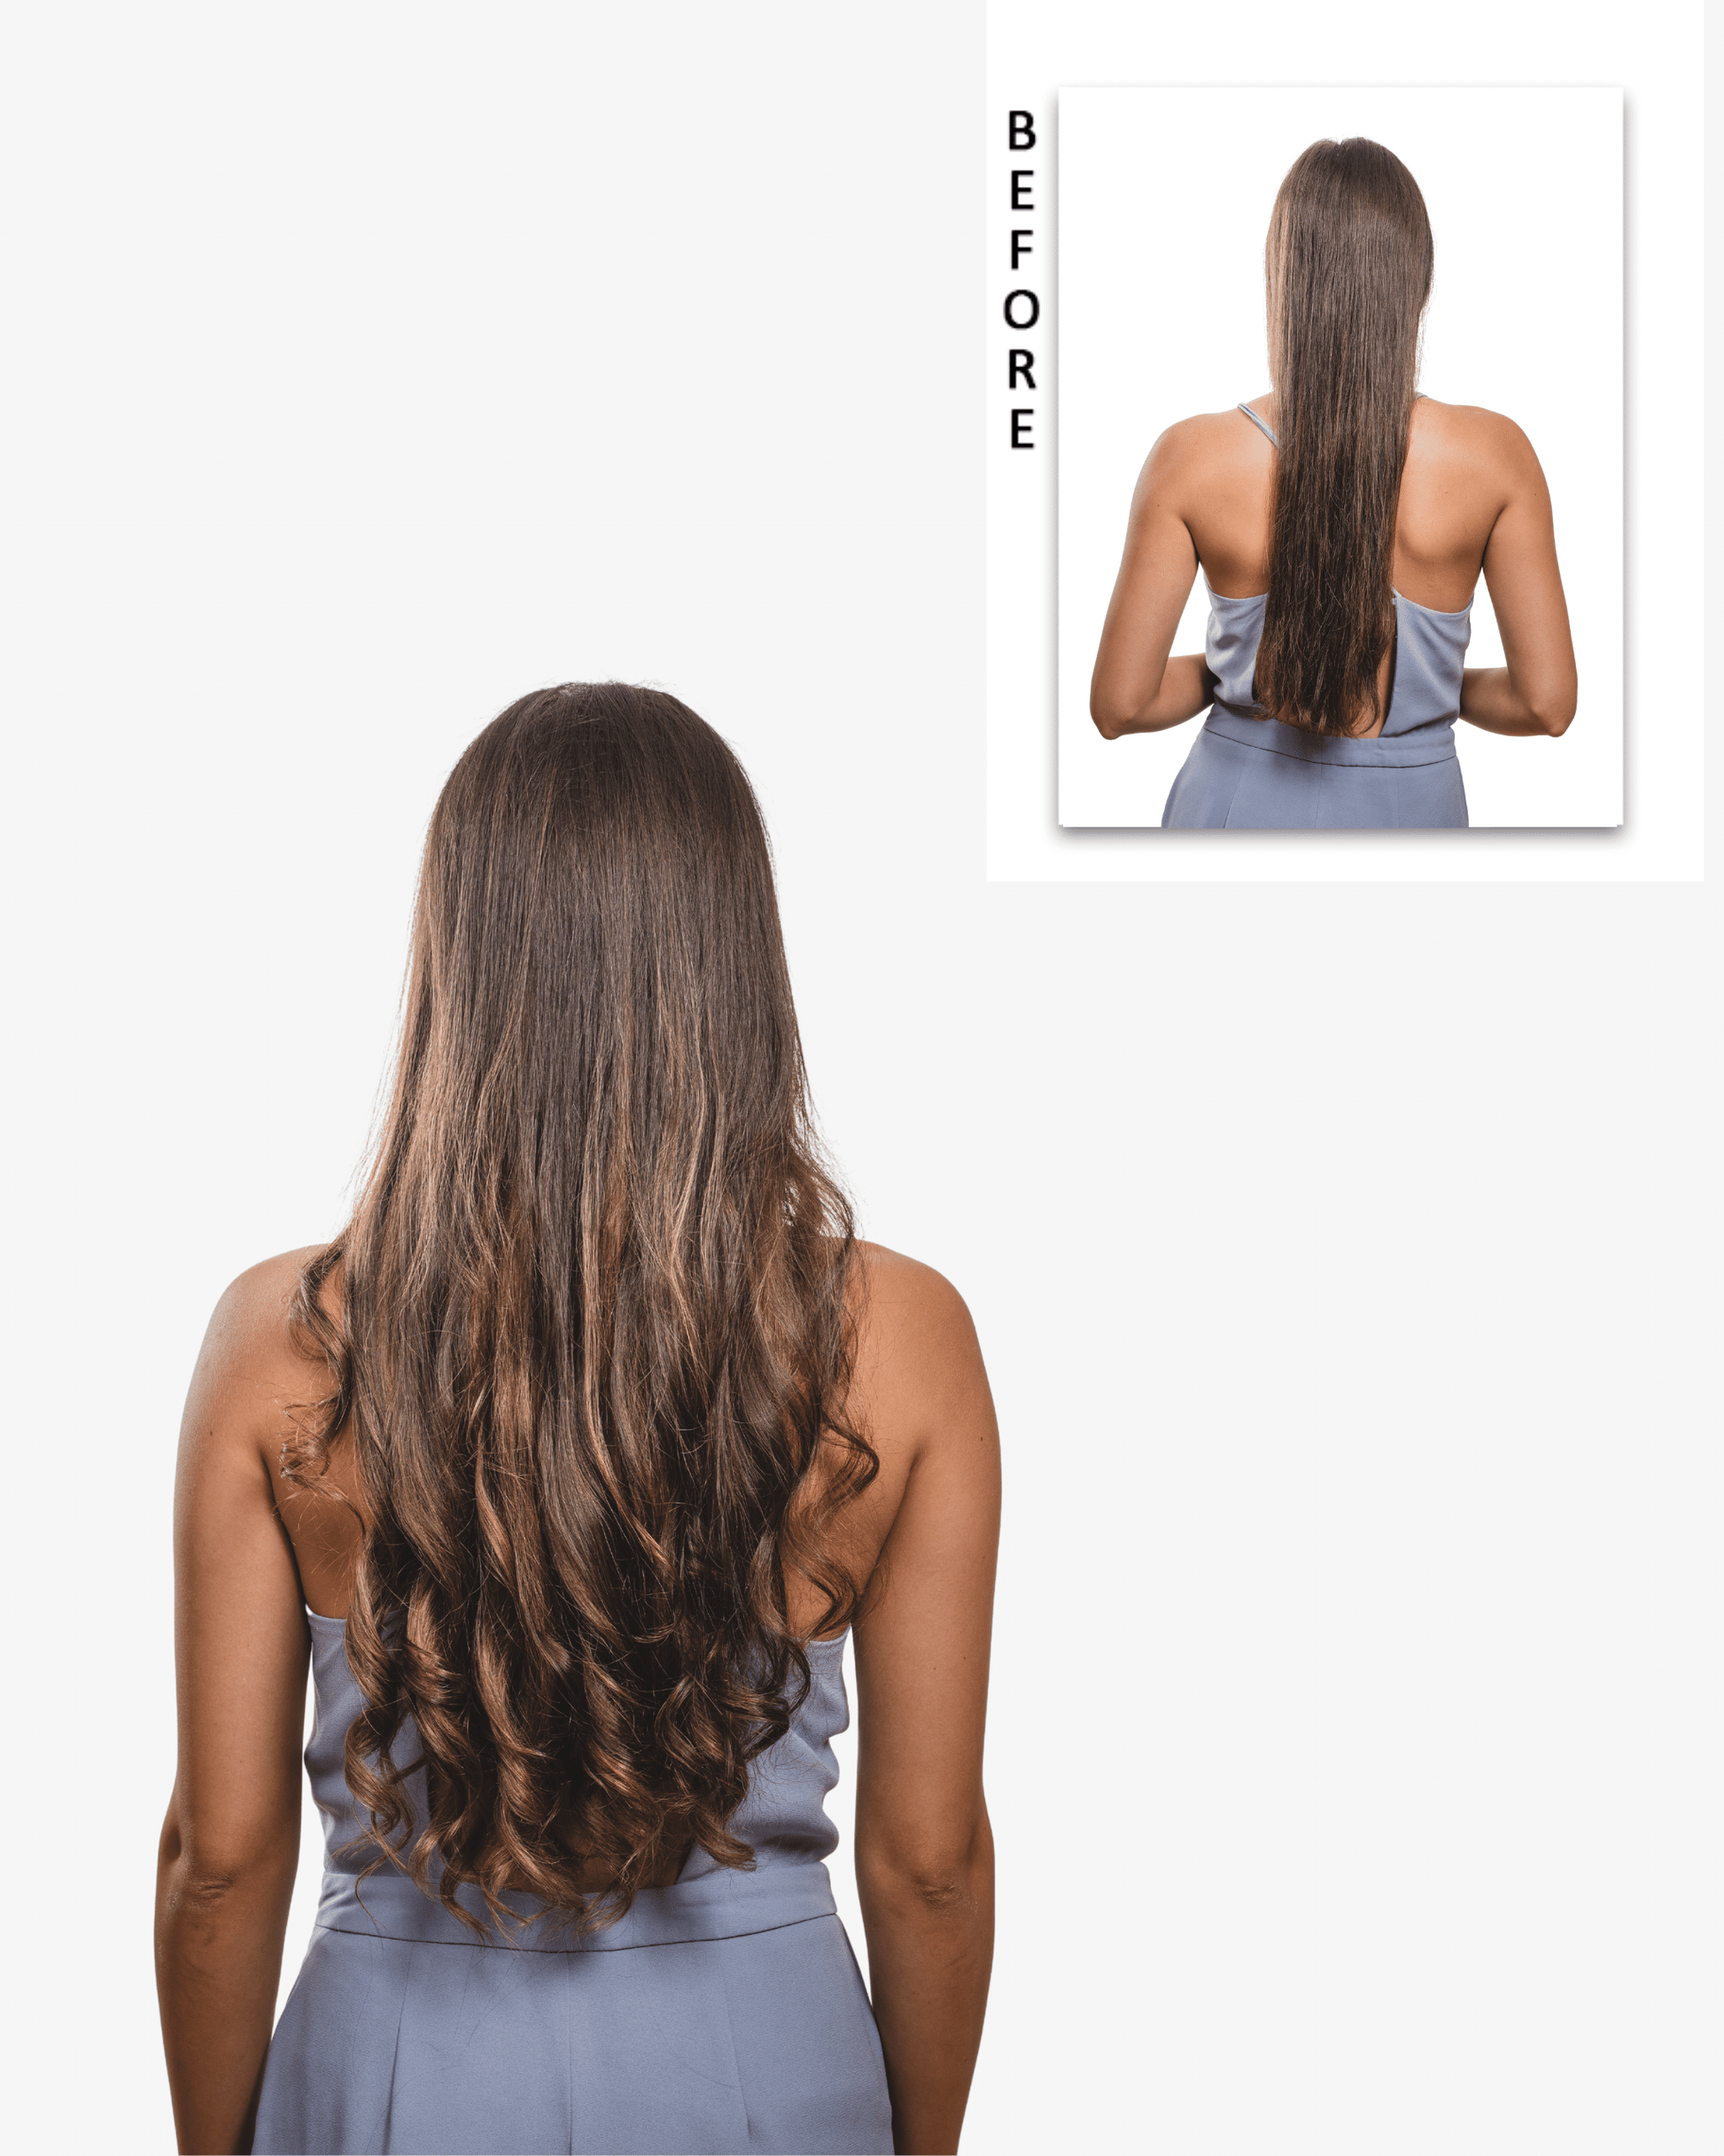 I Tip | Permanent Hair Extensions  HairOriginals   